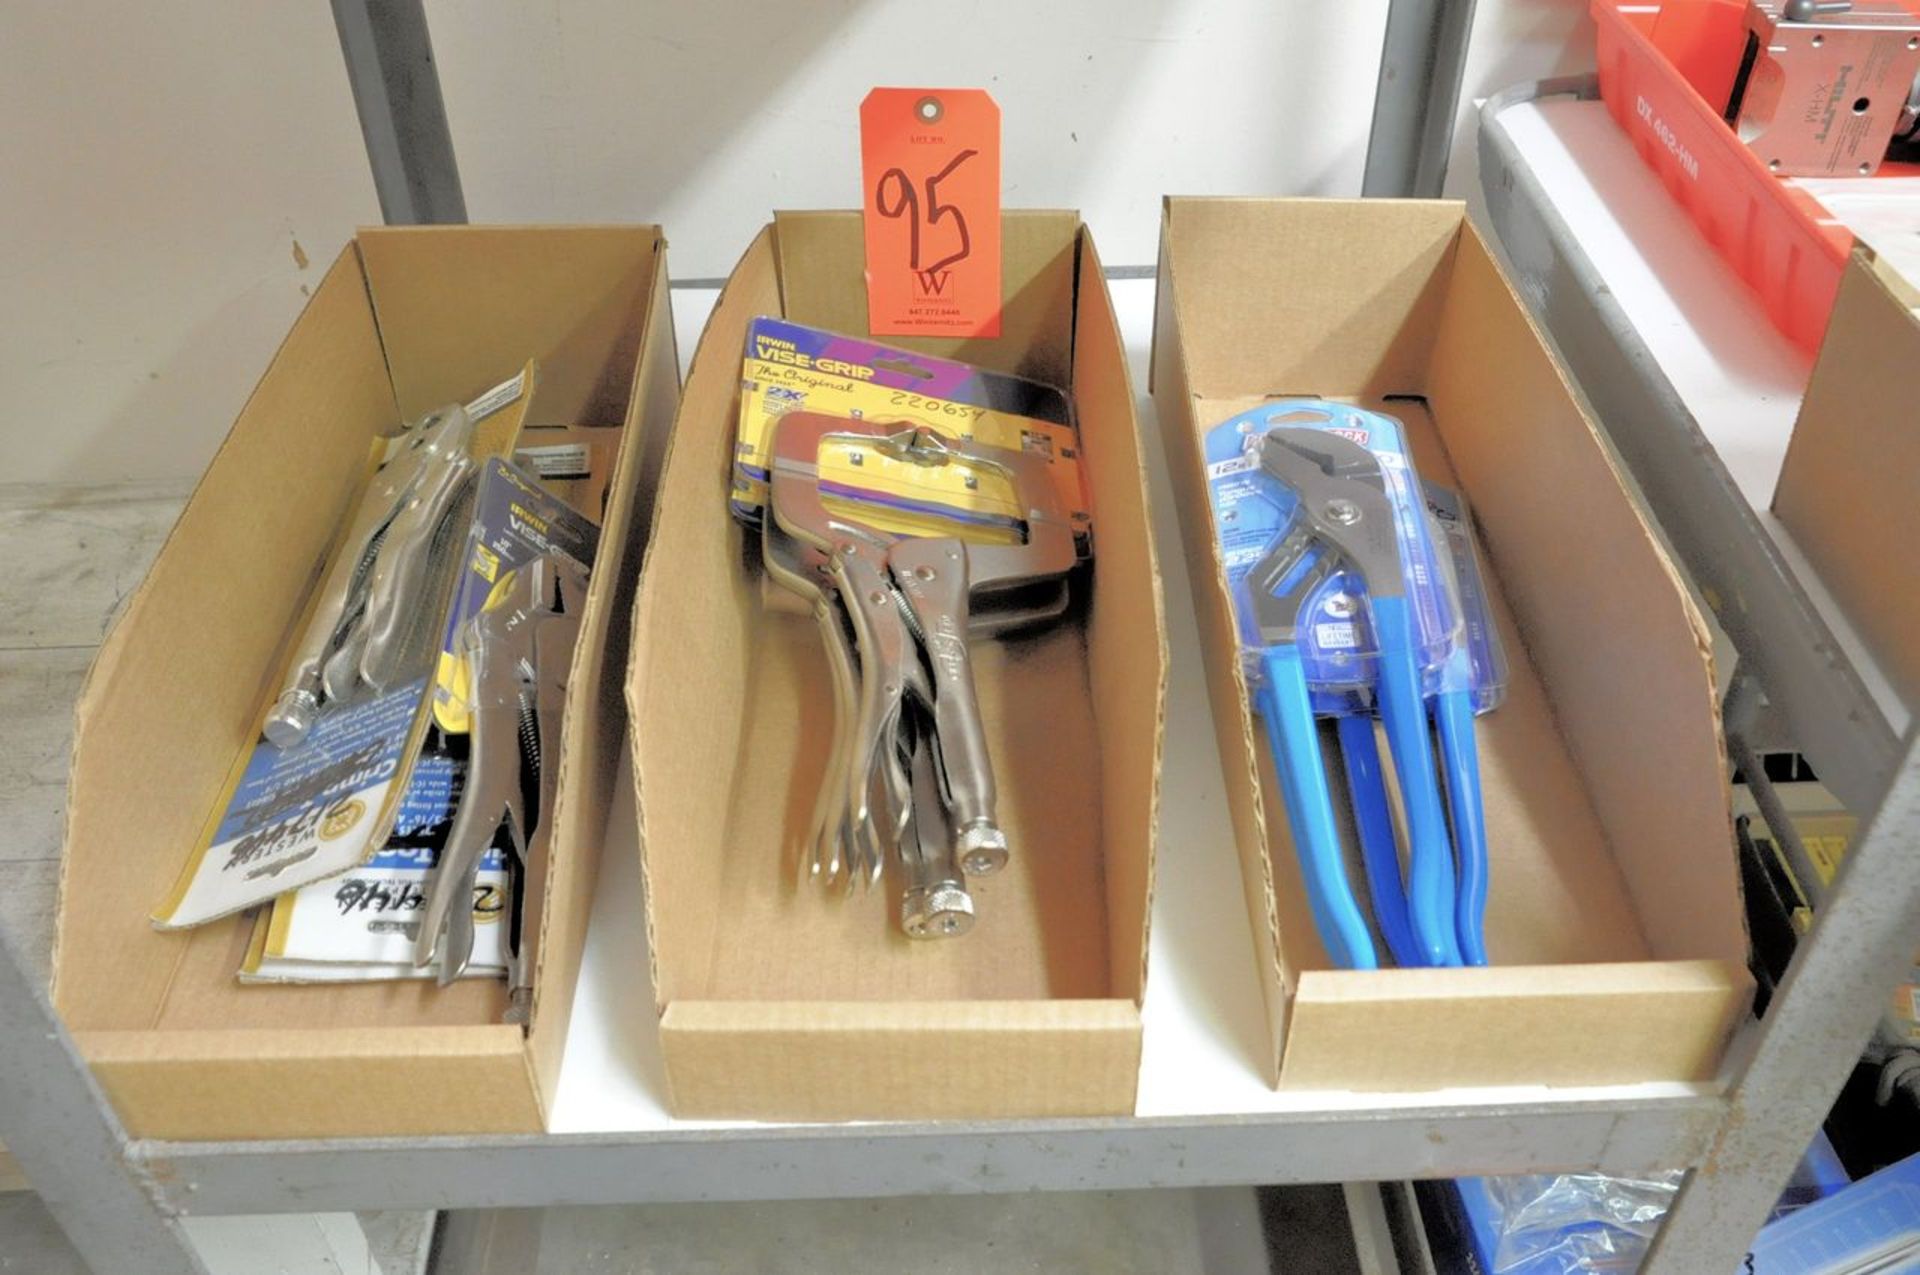 Lot - Vise Grip Pliers, Channel Lock Pliers, and Vise Grip Welding Pliers in (3) Boxes, (Storeroom)